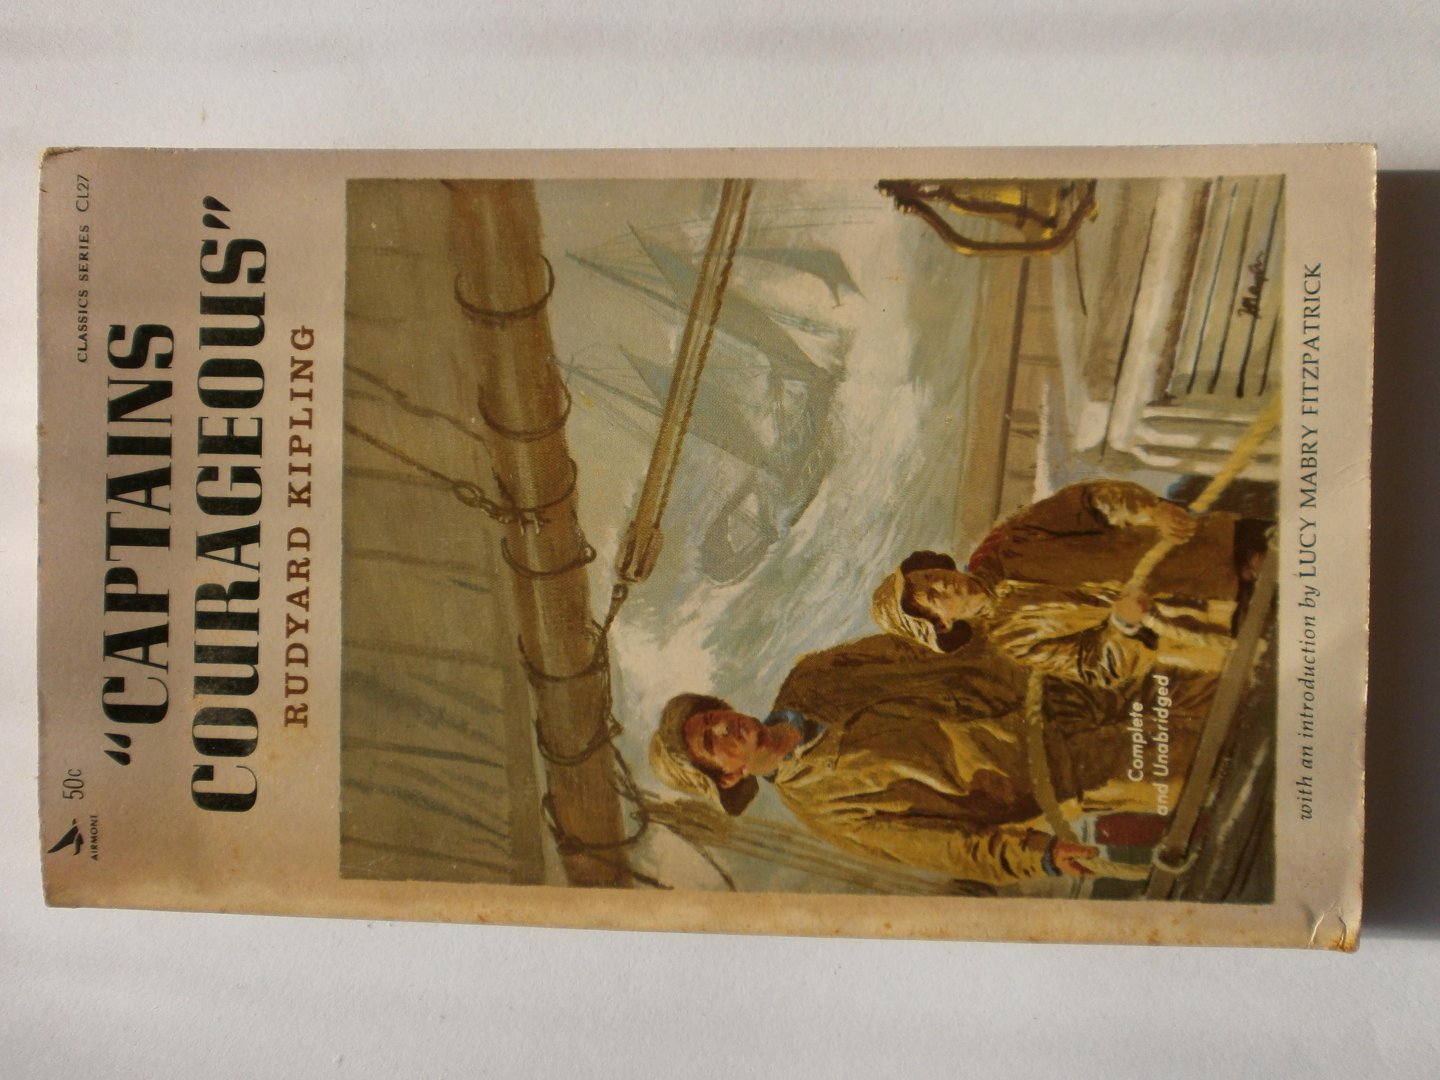 Kipling, Rudyard - Captains courageous